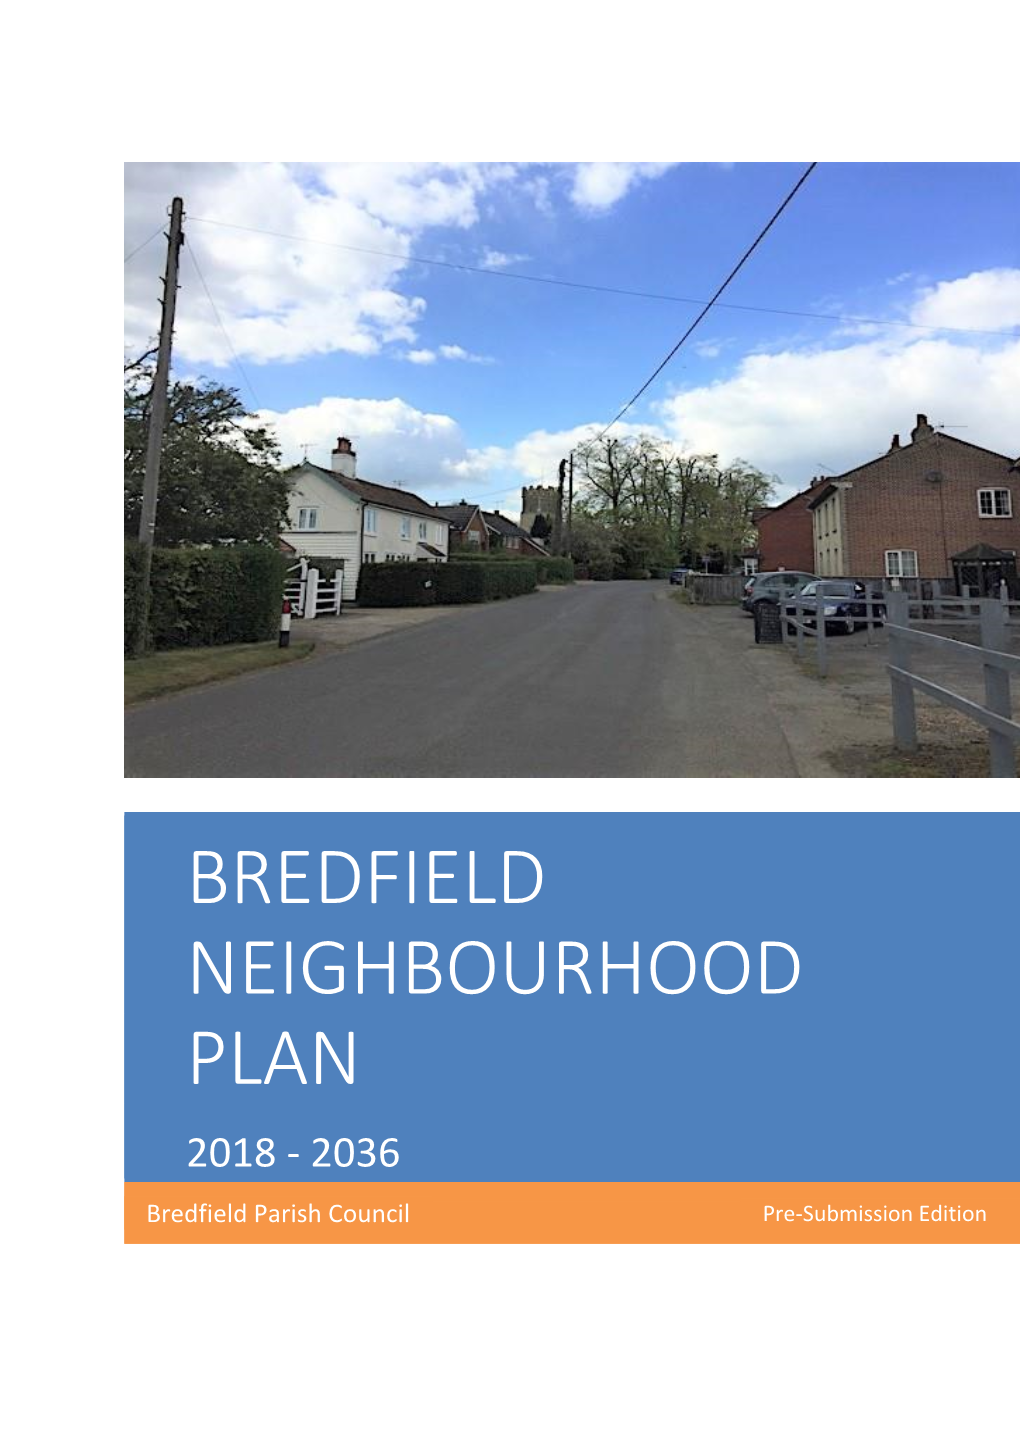 Bredfield Neighbourhood Plan